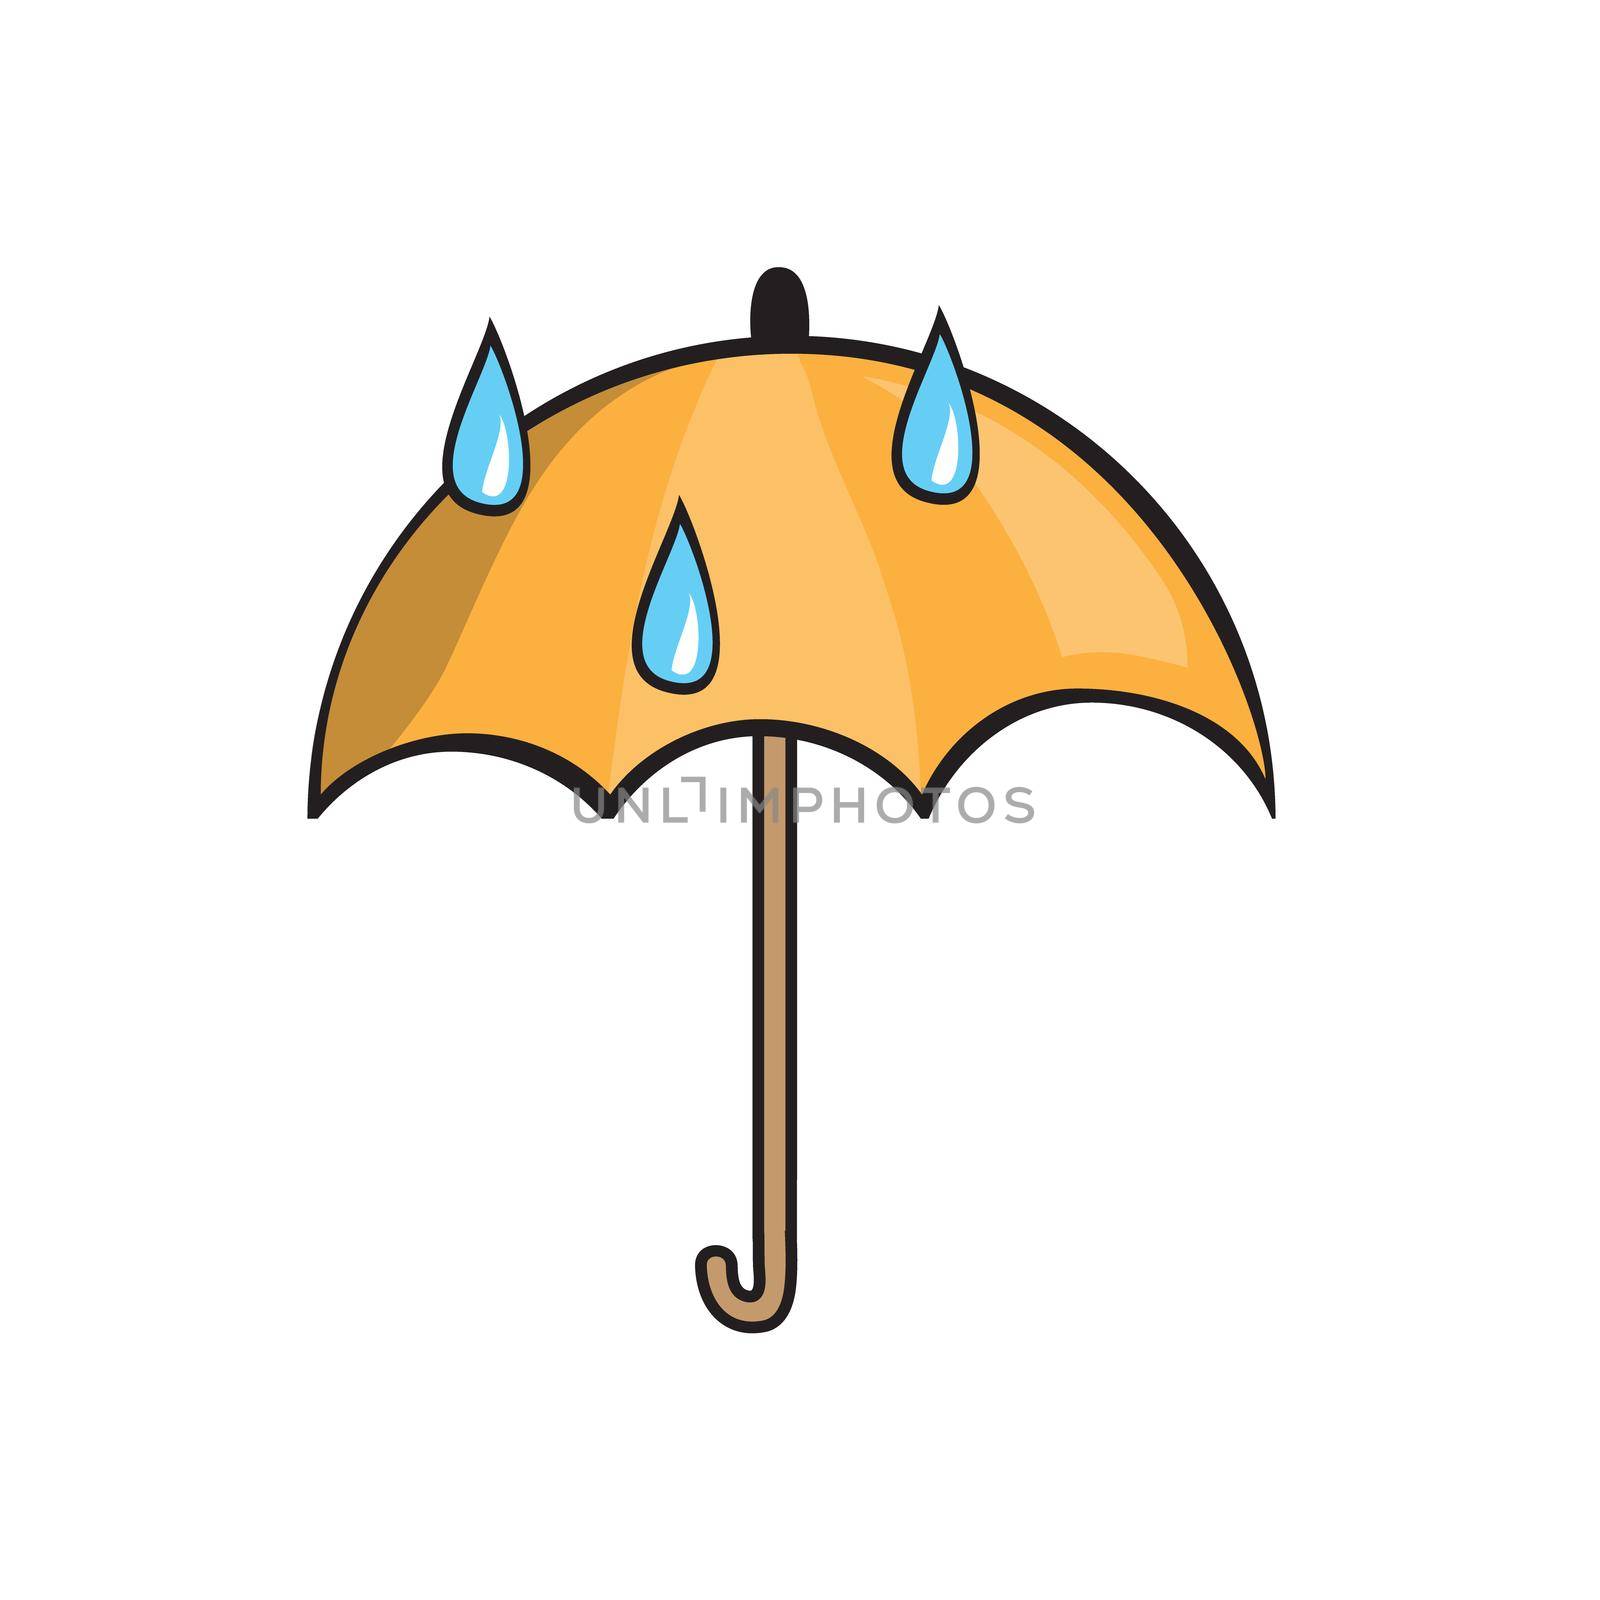 Yellow umbrella and rain drops icon. Yellow umbrella isolated on white background. Umbrella in cartoon style